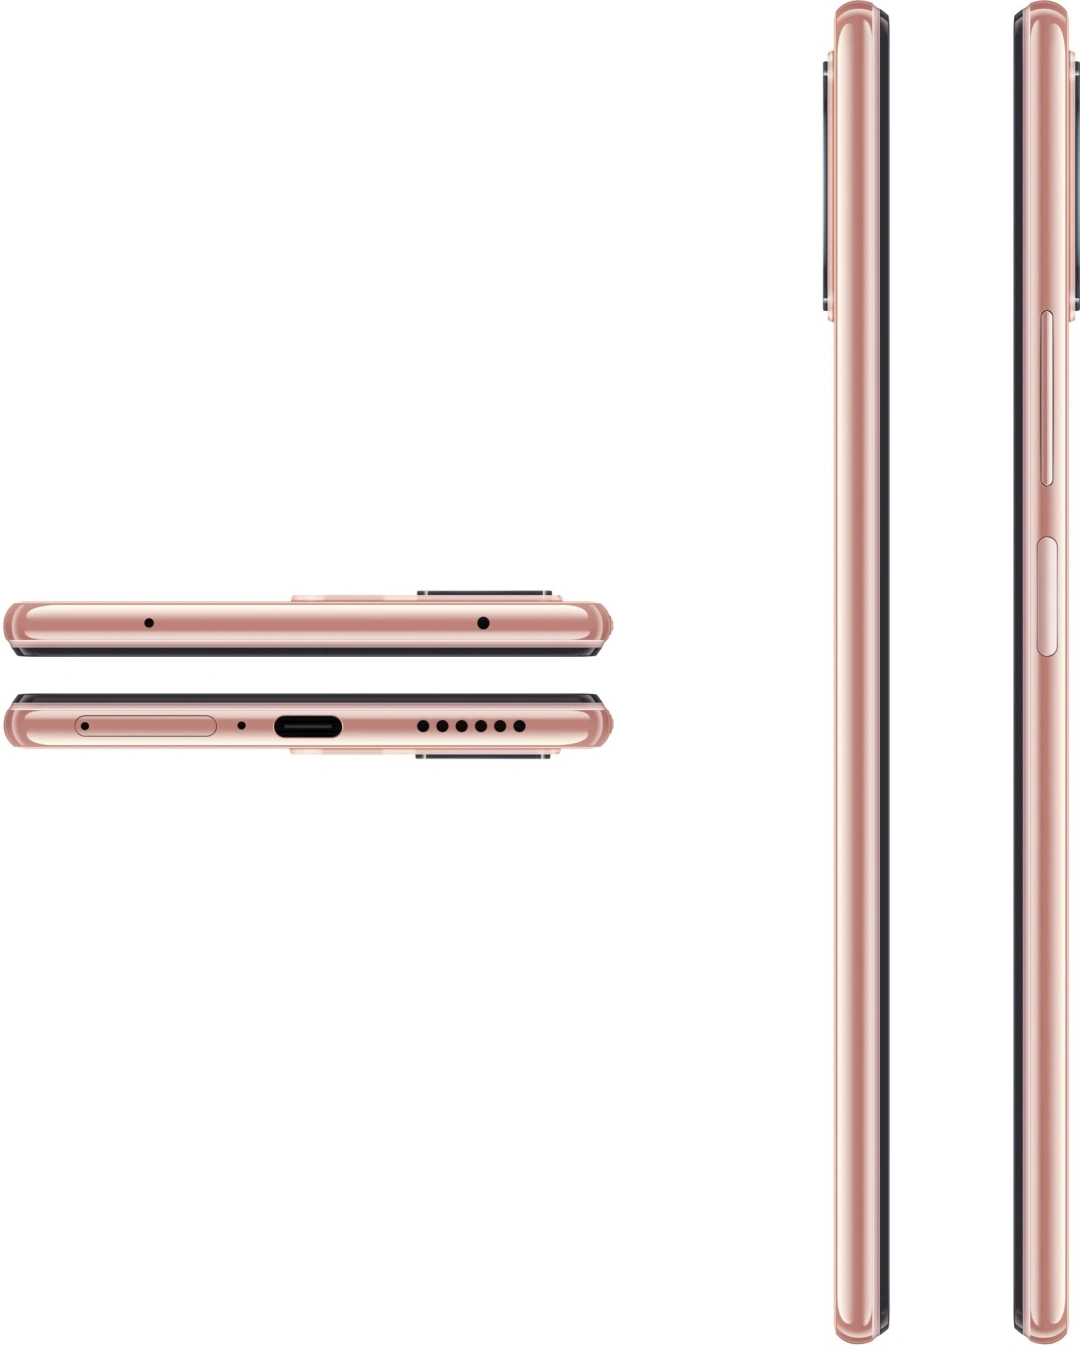 Xiaomi 11 Lite 5G NE, 8GB/128GB, Peach Pink